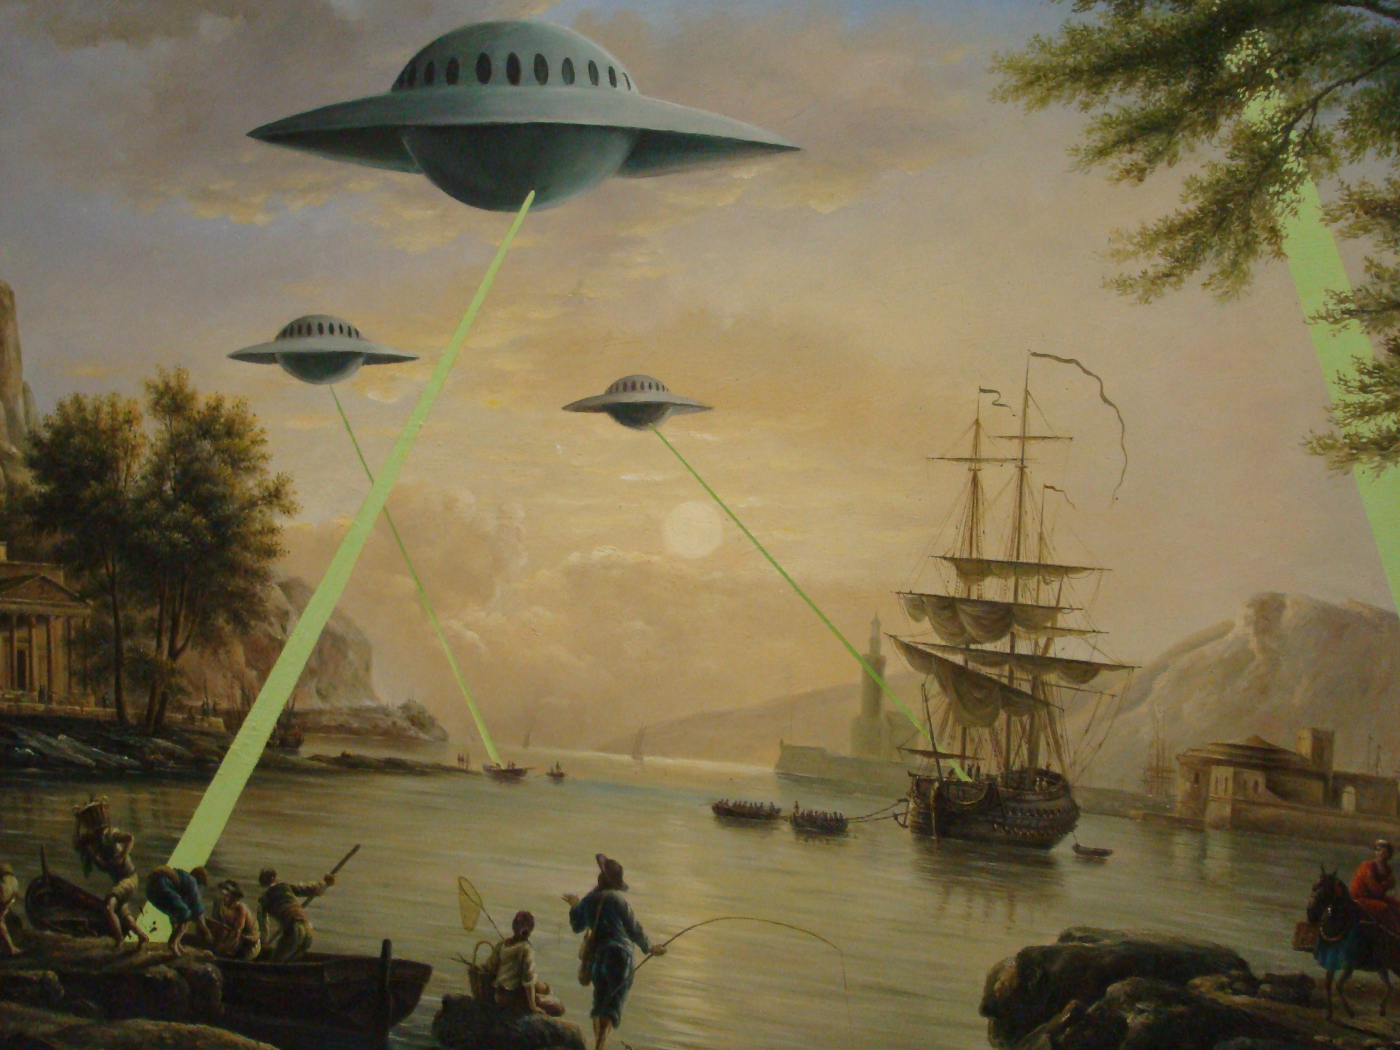 Graffiti UFOs in the past